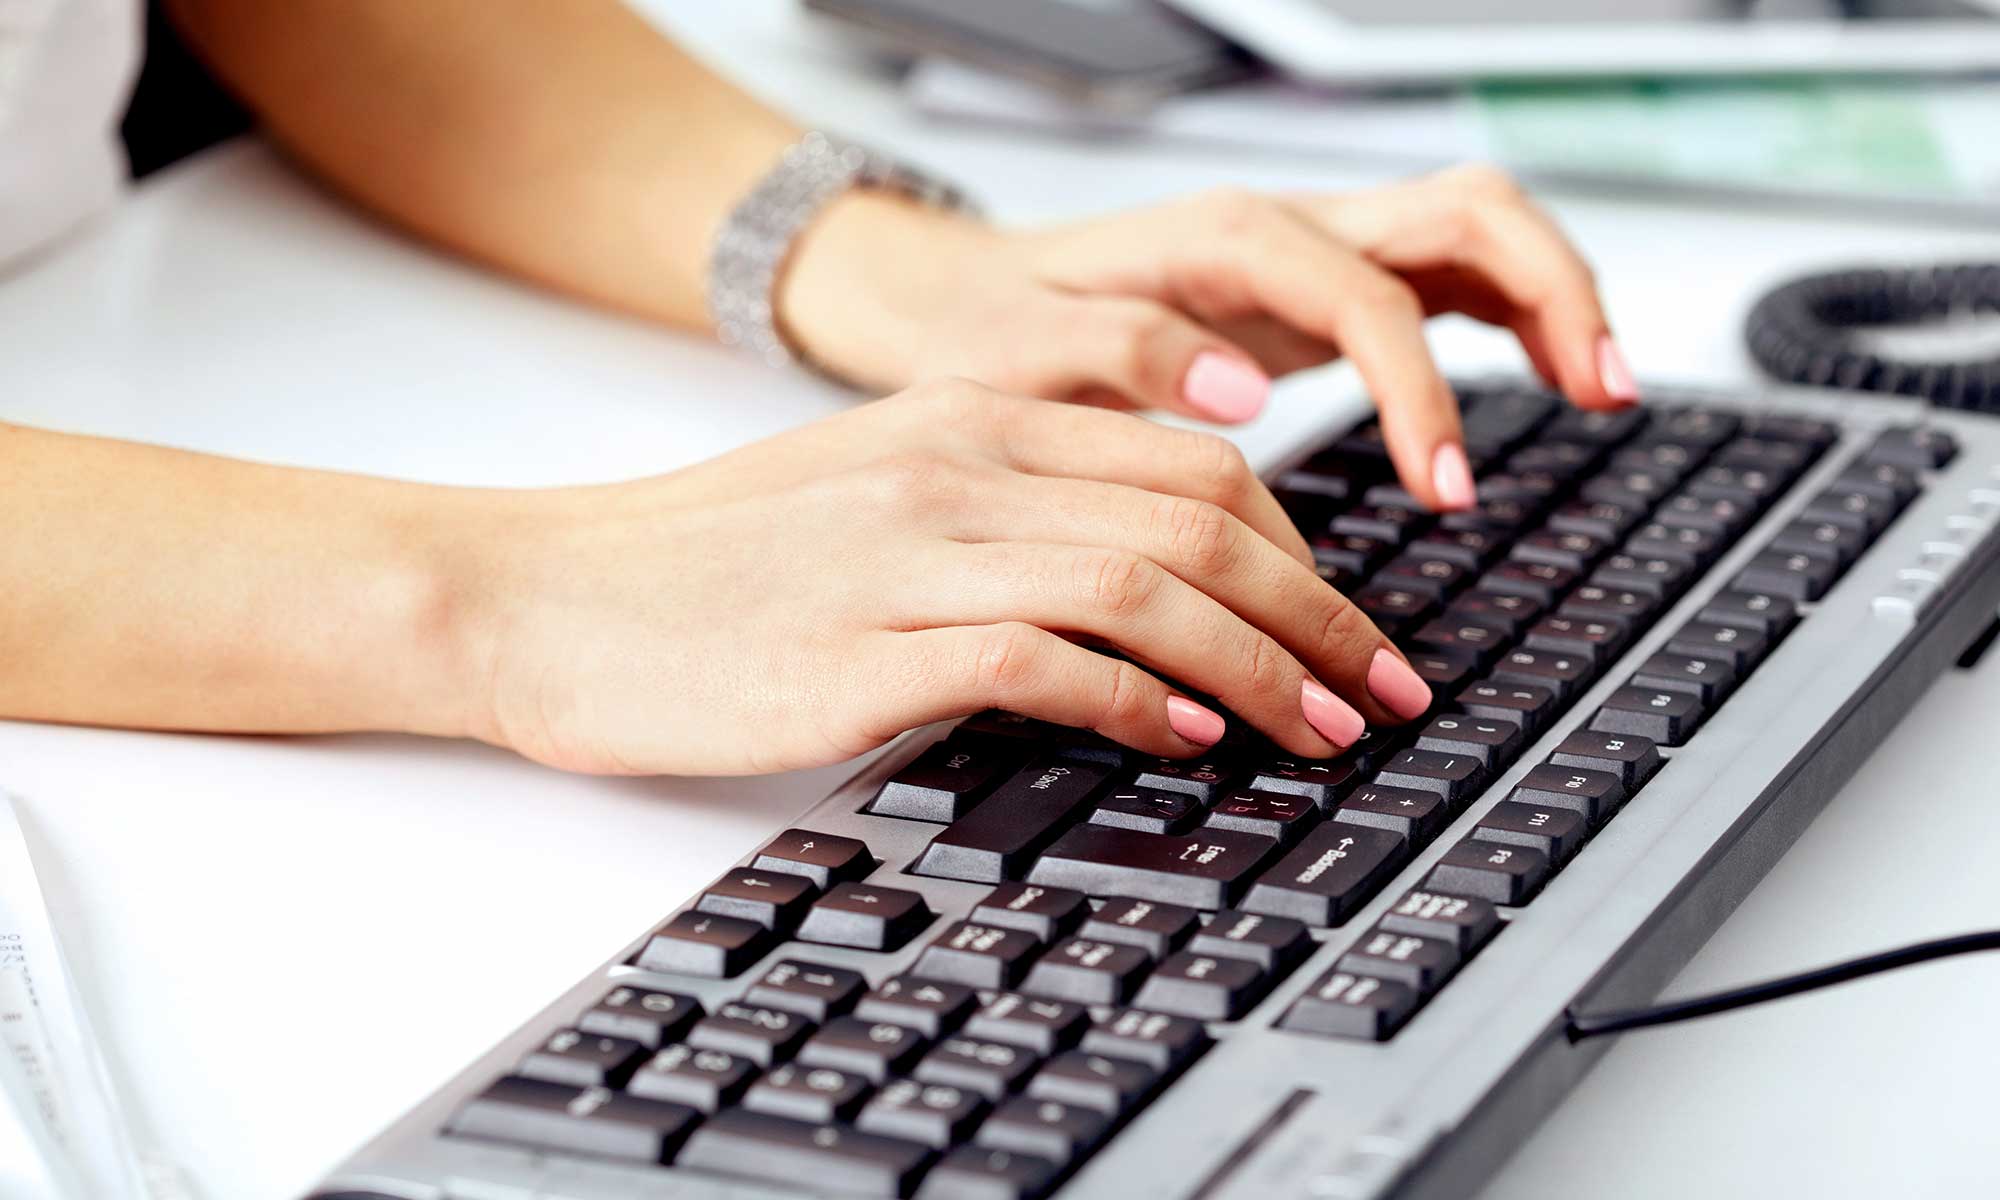 Человек набирает текст. Руки на клавиатуре. Женские руки на клавиатуре. Человек печатающий на клавиатуре. Печатает на клавиатуре.